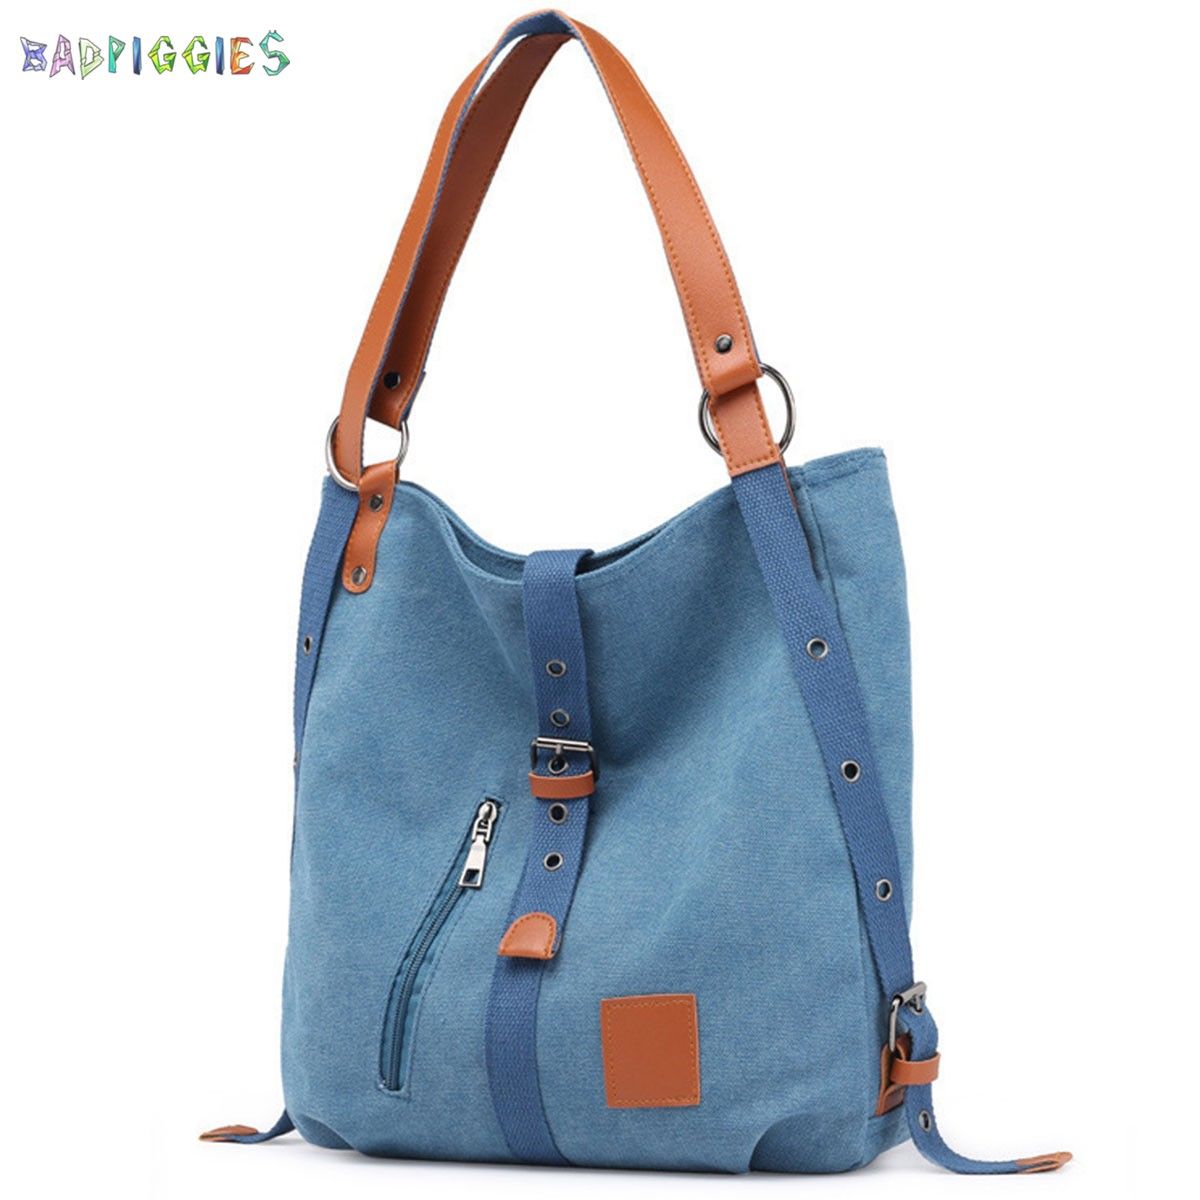 BadPiggies Canvas Handbag Tote Shoulder Bag for Women Casual School Purse Hobo Bag Rucksack Convertible Backpack (Blue) - image 1 of 10